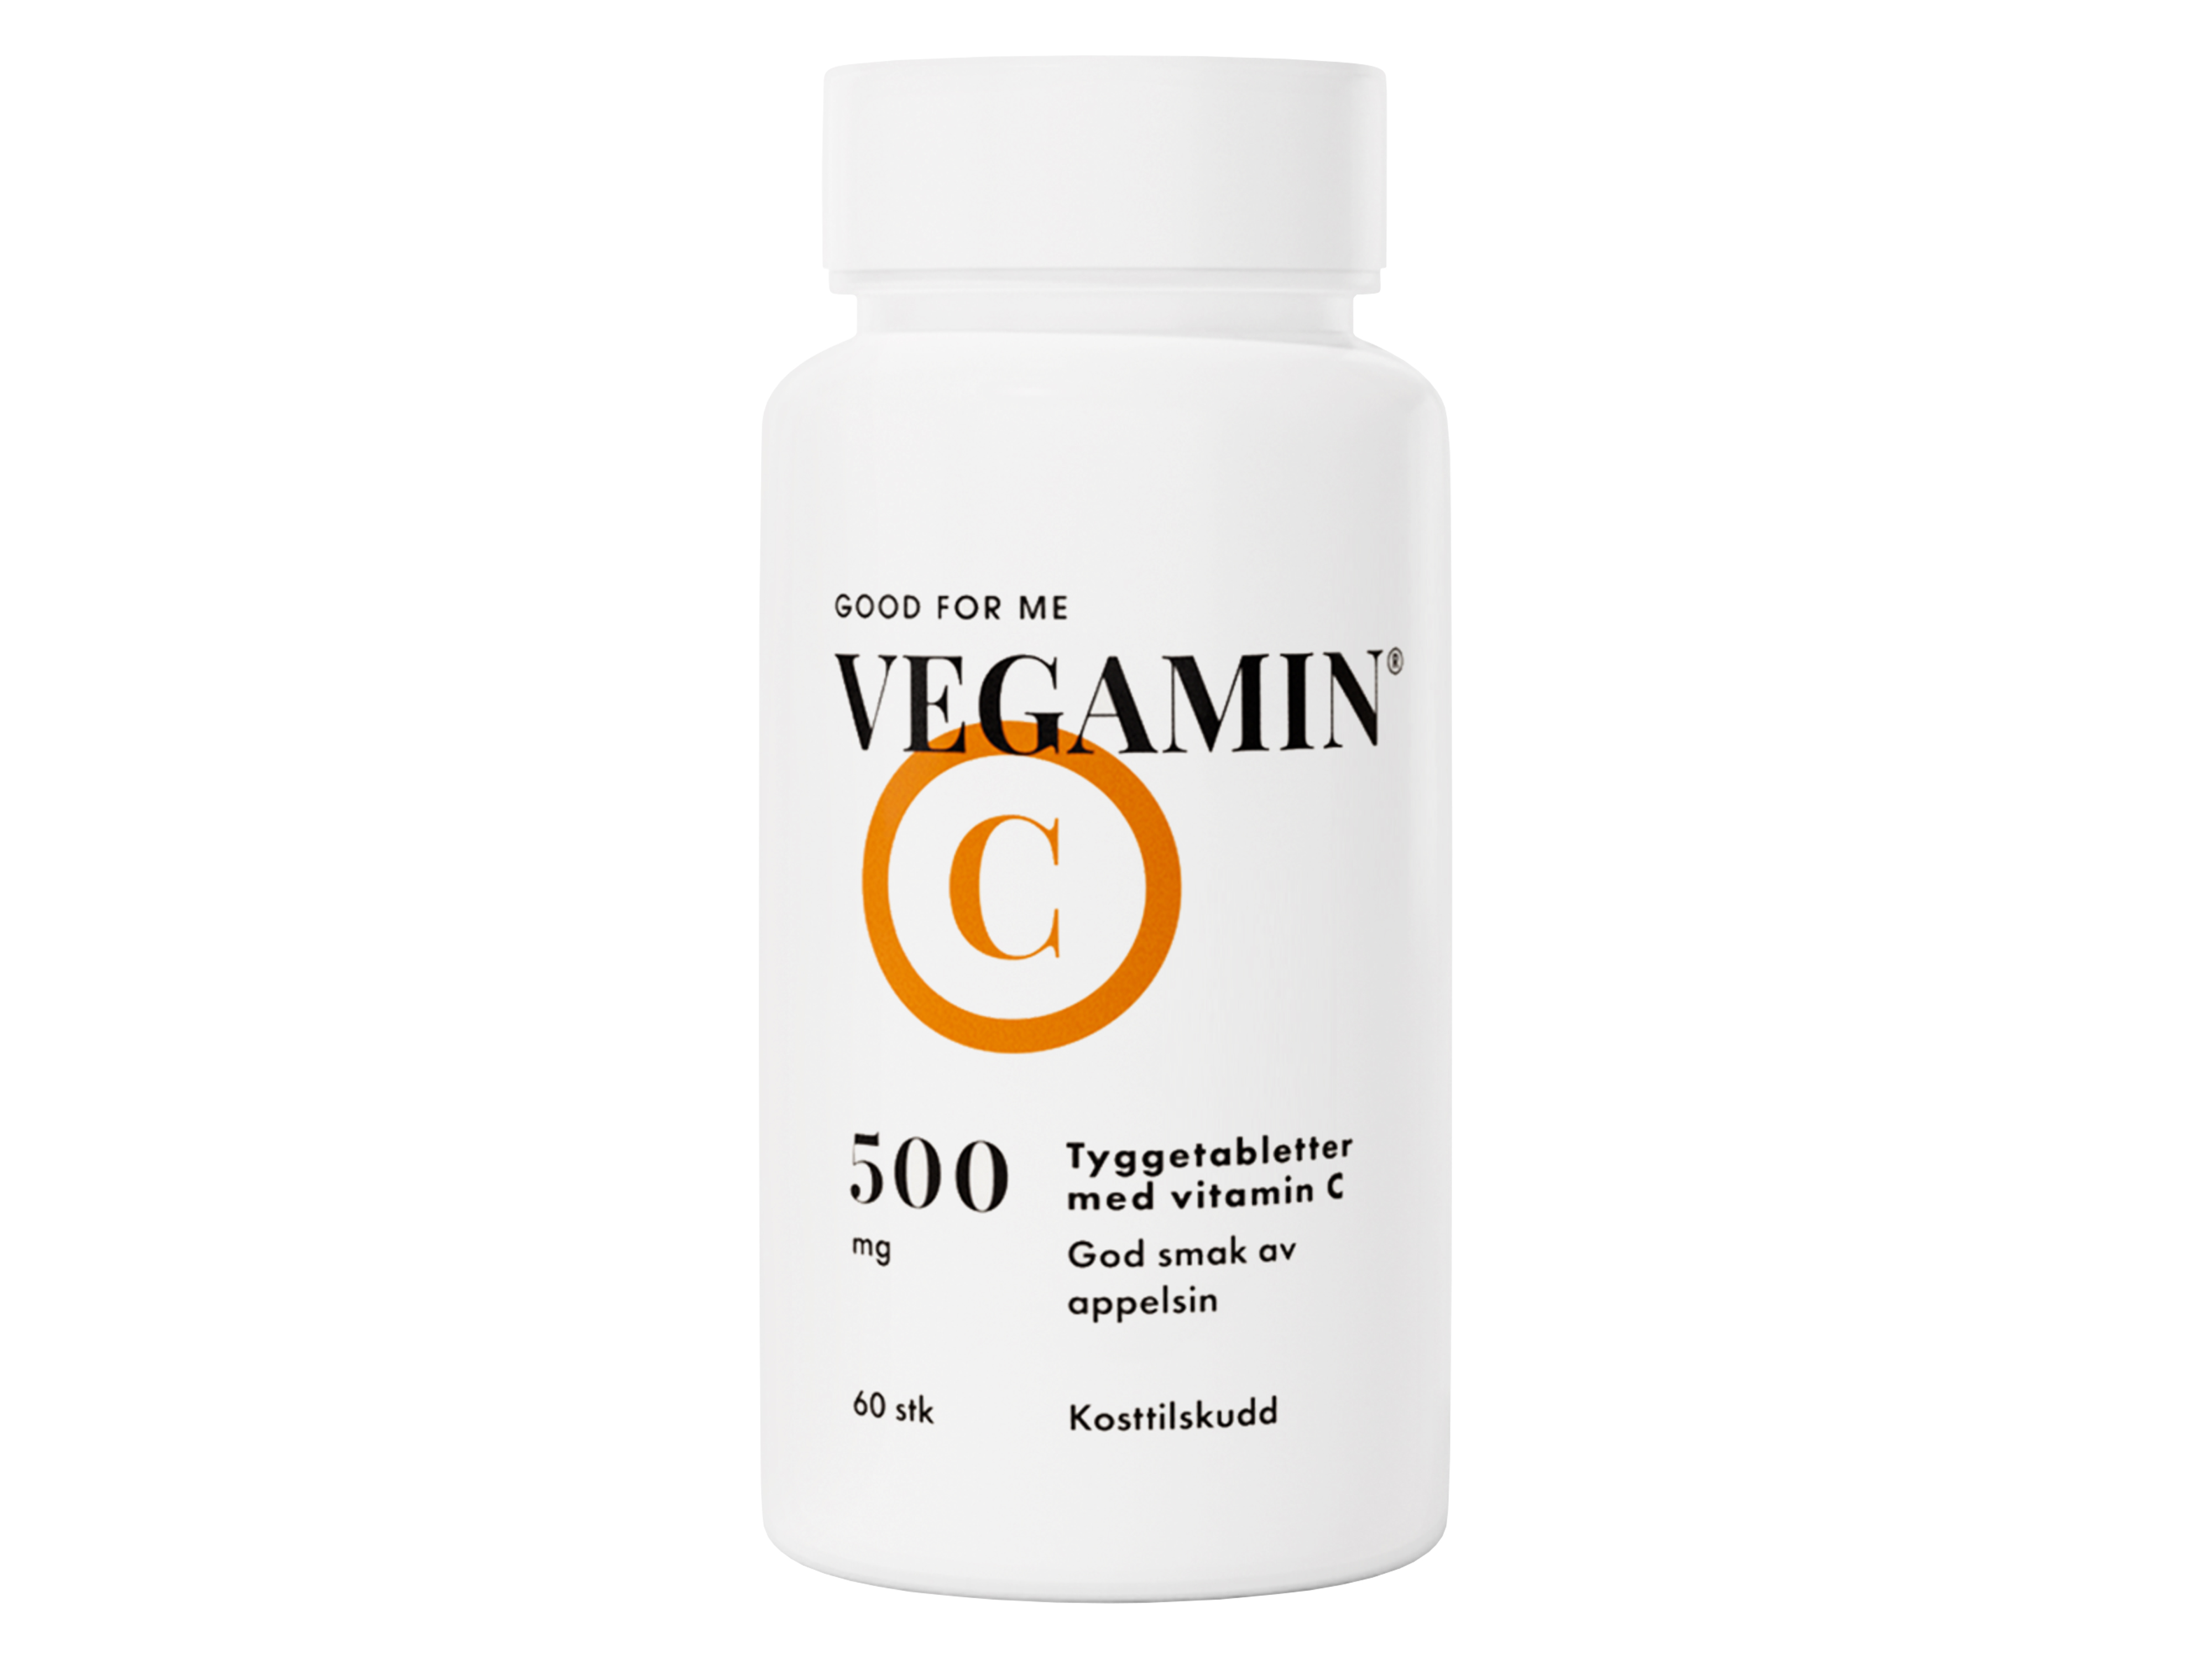 Good For Me Vegamin C-vitamin 500 mg, 60 tyggetabletter,